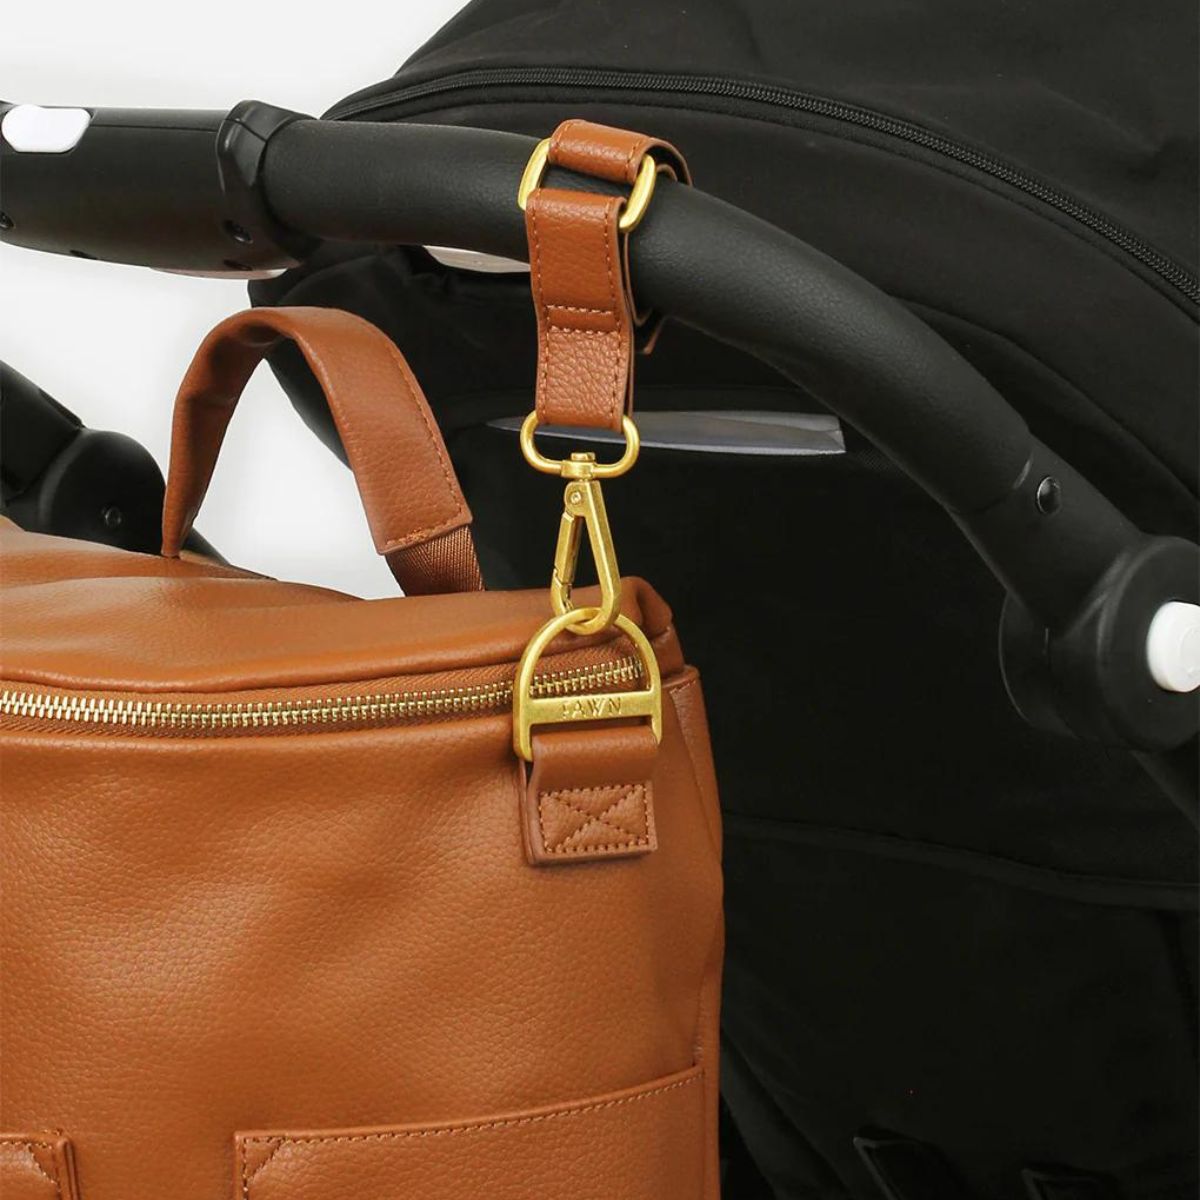 Fawn Design Stroller Hooks on stroller - Brown